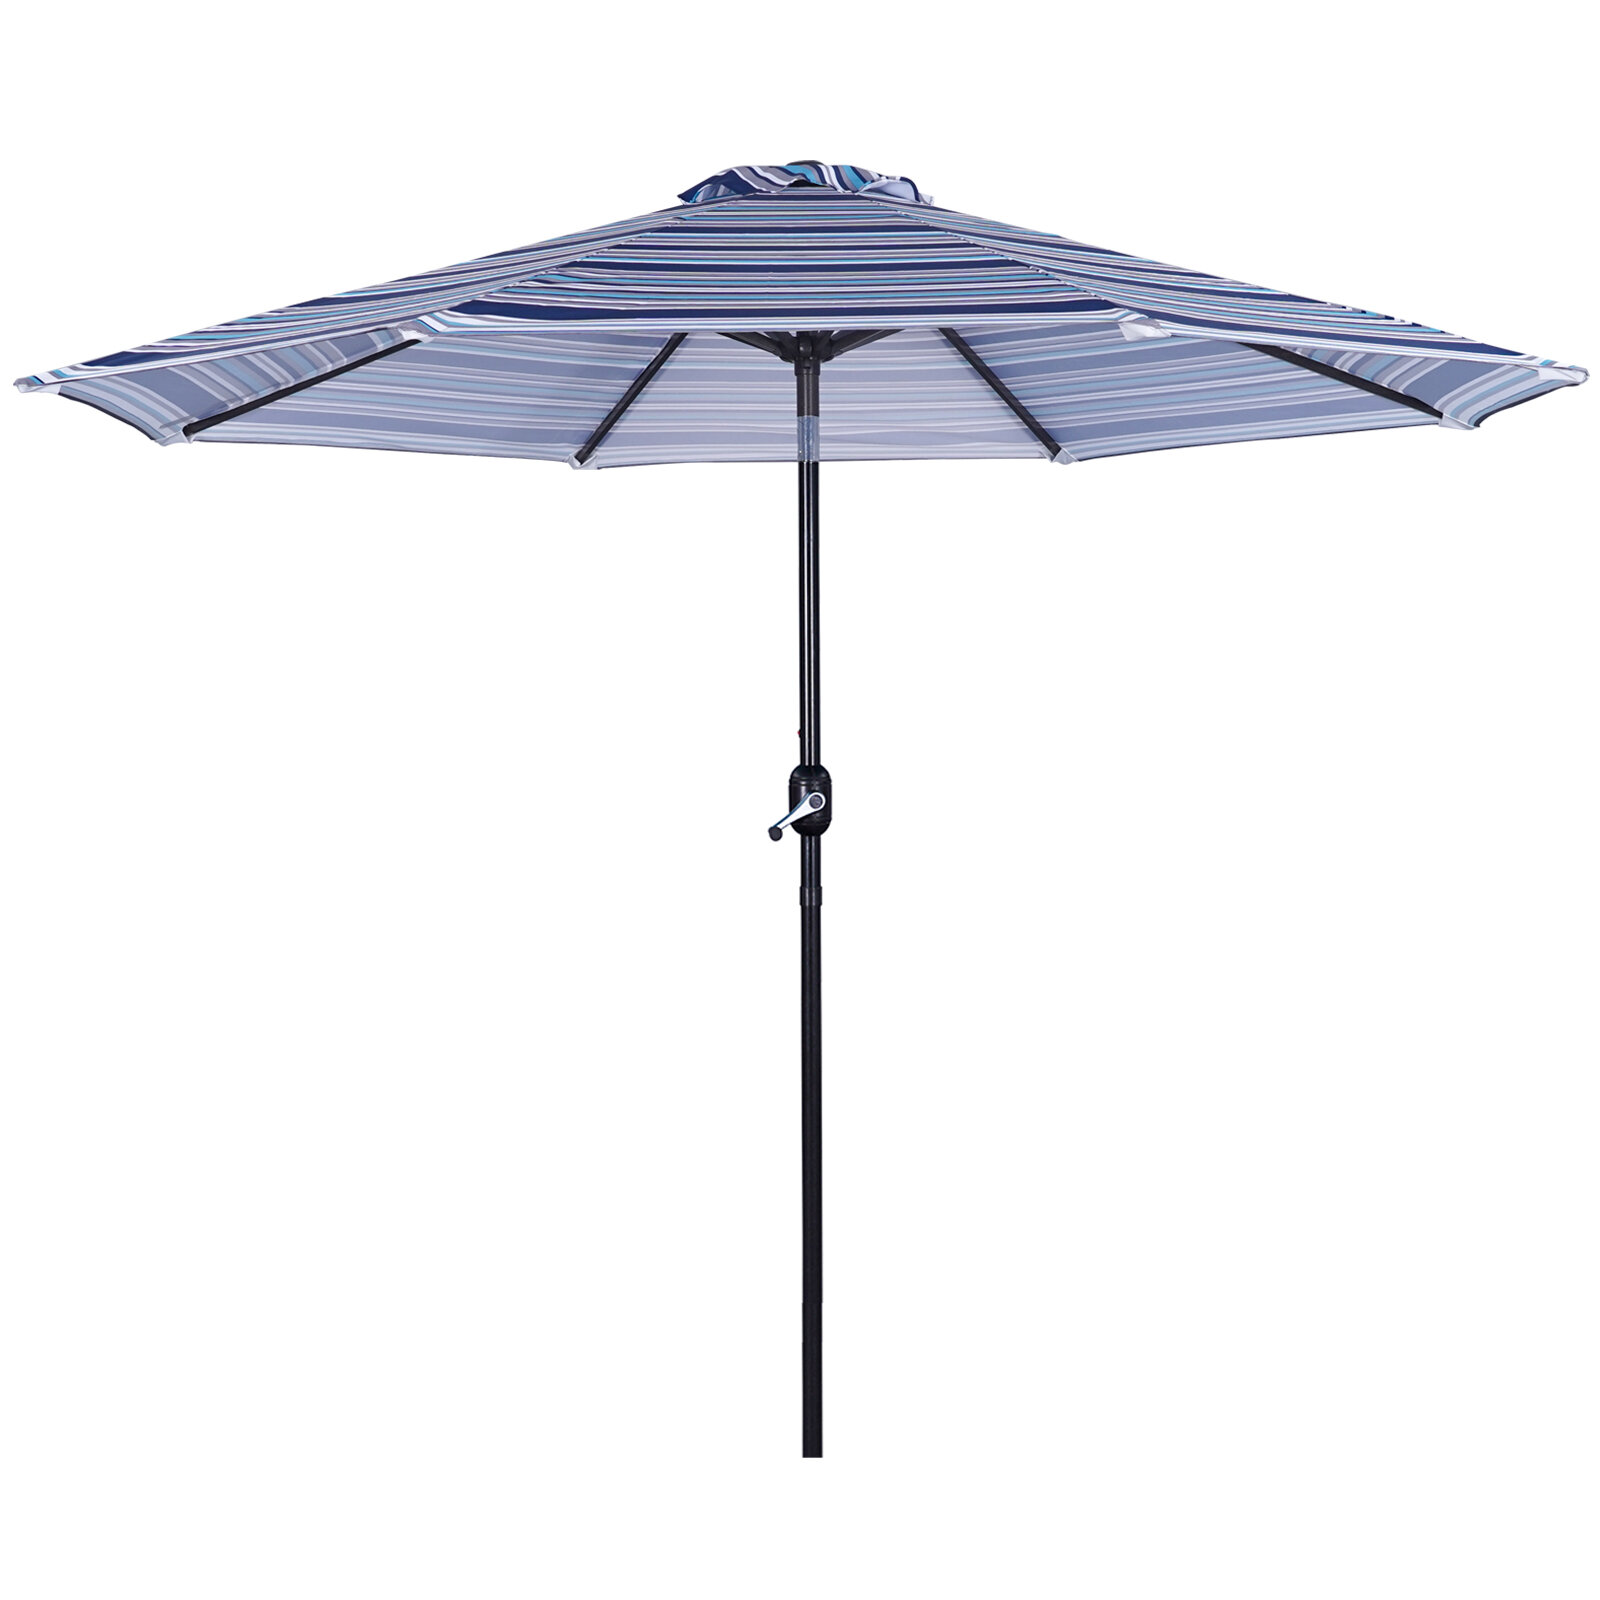 Heavy Duty Outdoor Patio Umbrella Protective Cover Bag Waterproof Canopy 7-11'ft